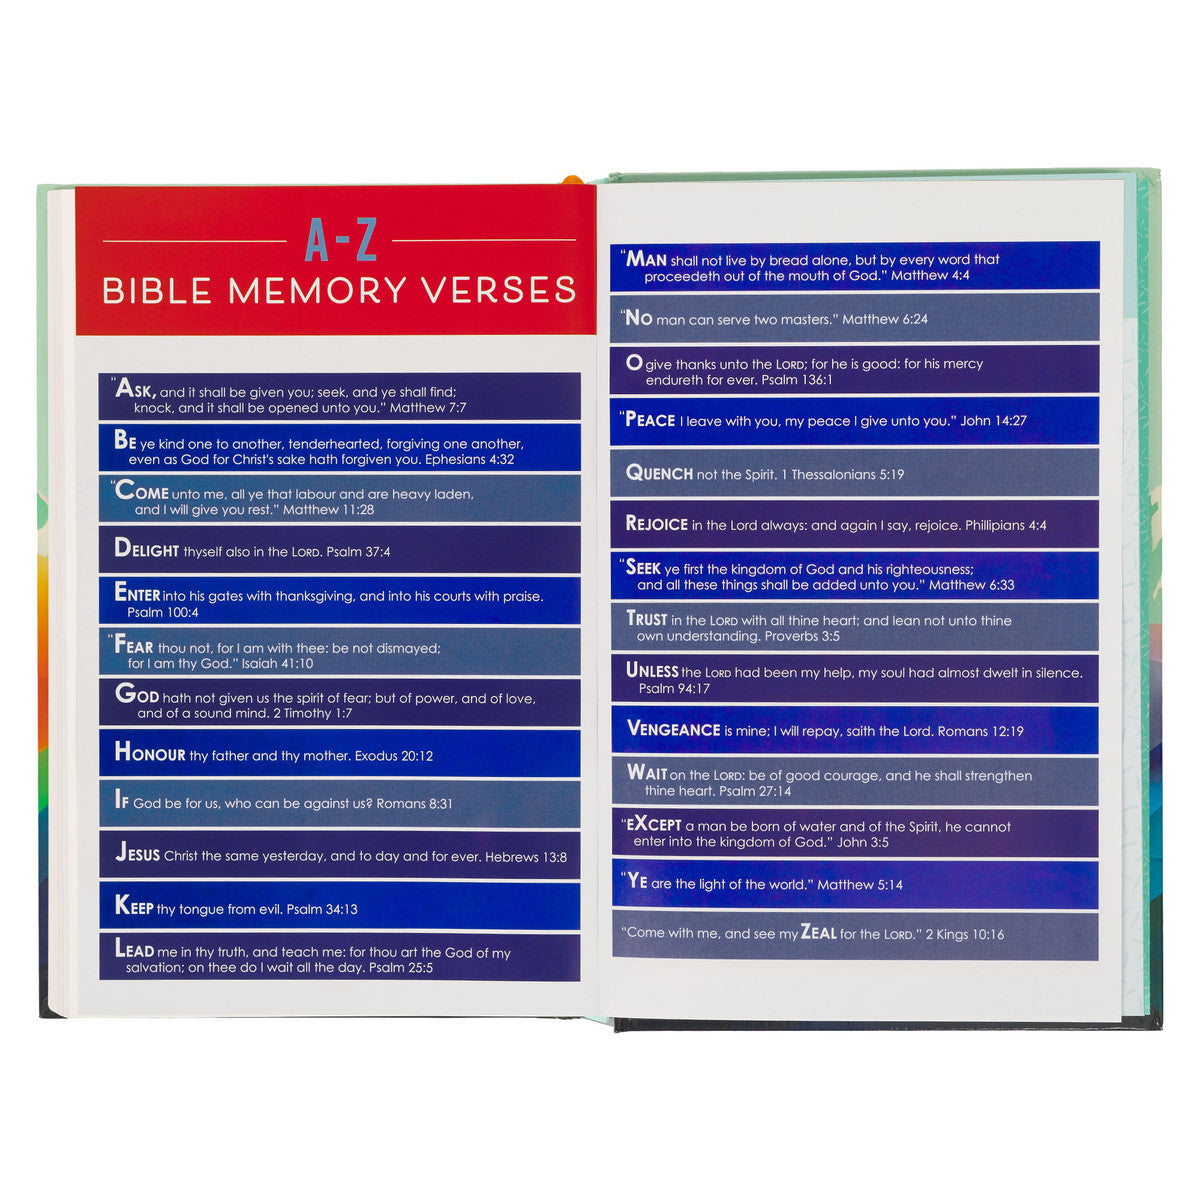 Colorful Hardcover Kid's King James Version Bible (Teal)